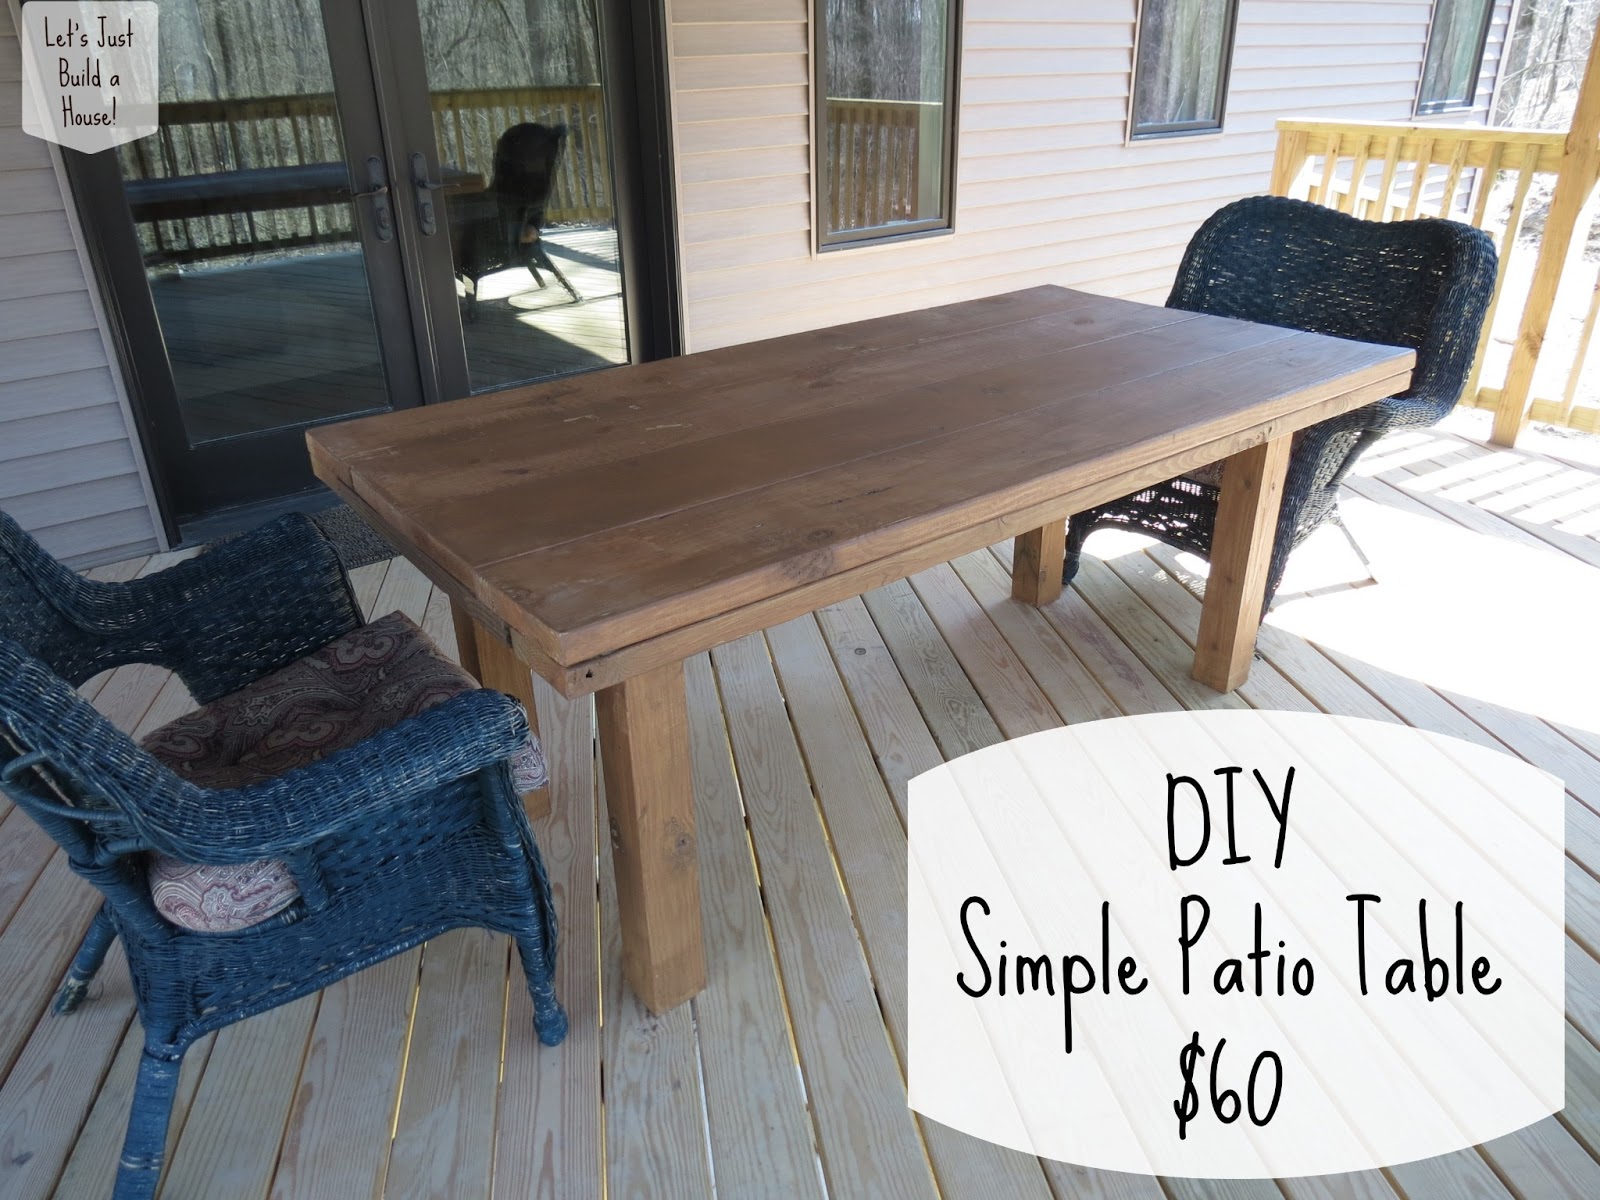 Let's Just Build a House!: DIY Simple Patio Table Details